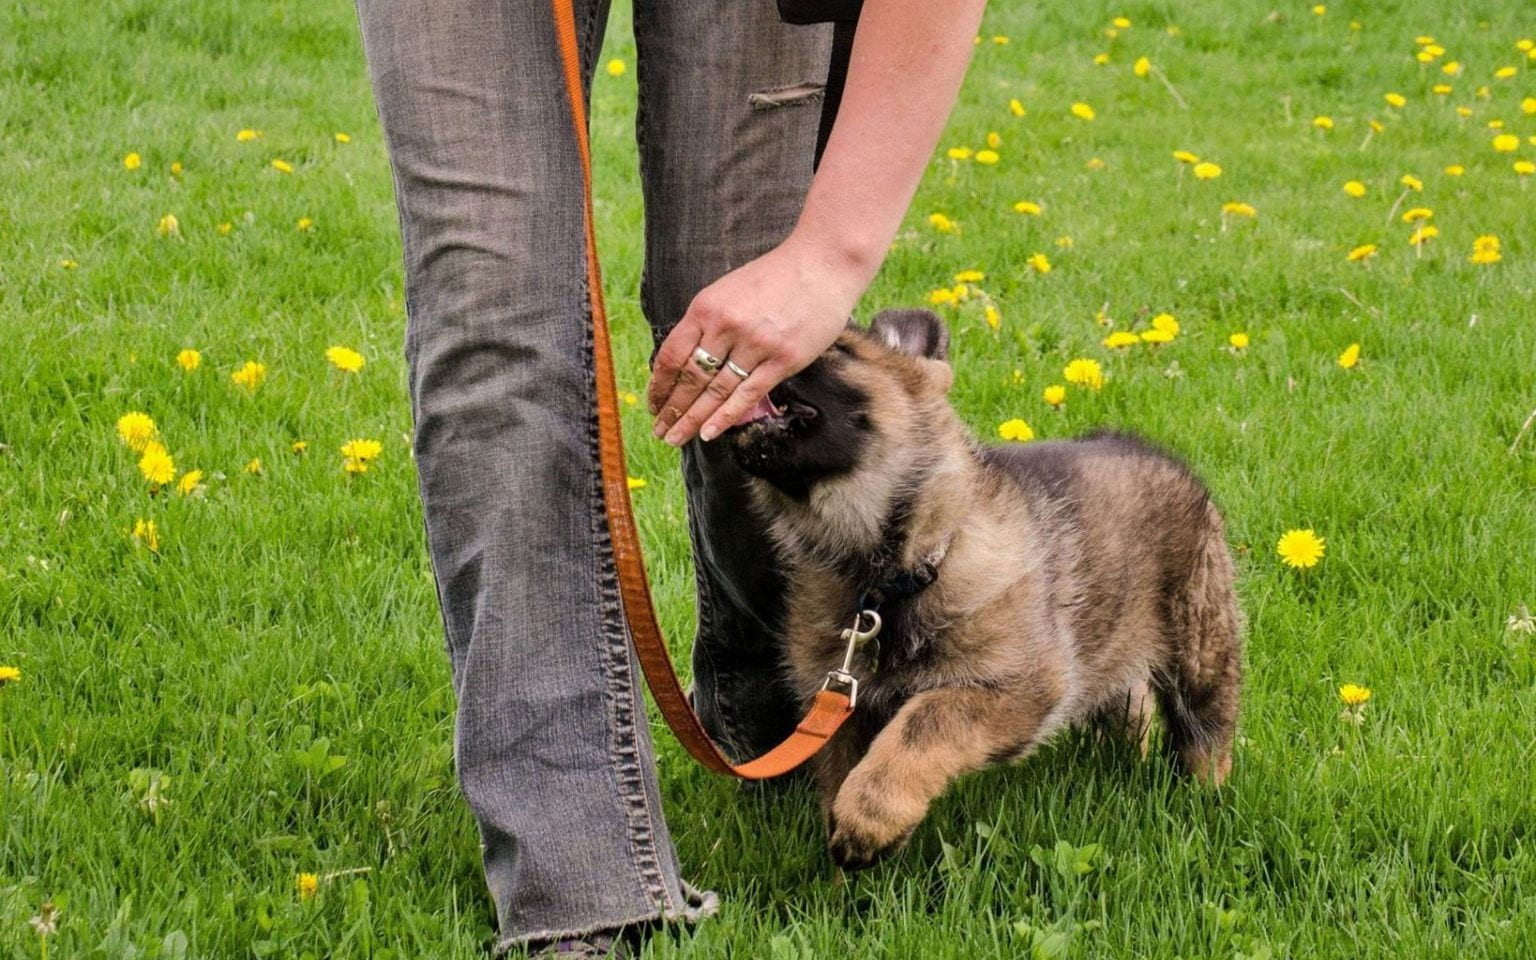 A woman leash training her german shepherd puppy in a grassy field with dandelions.